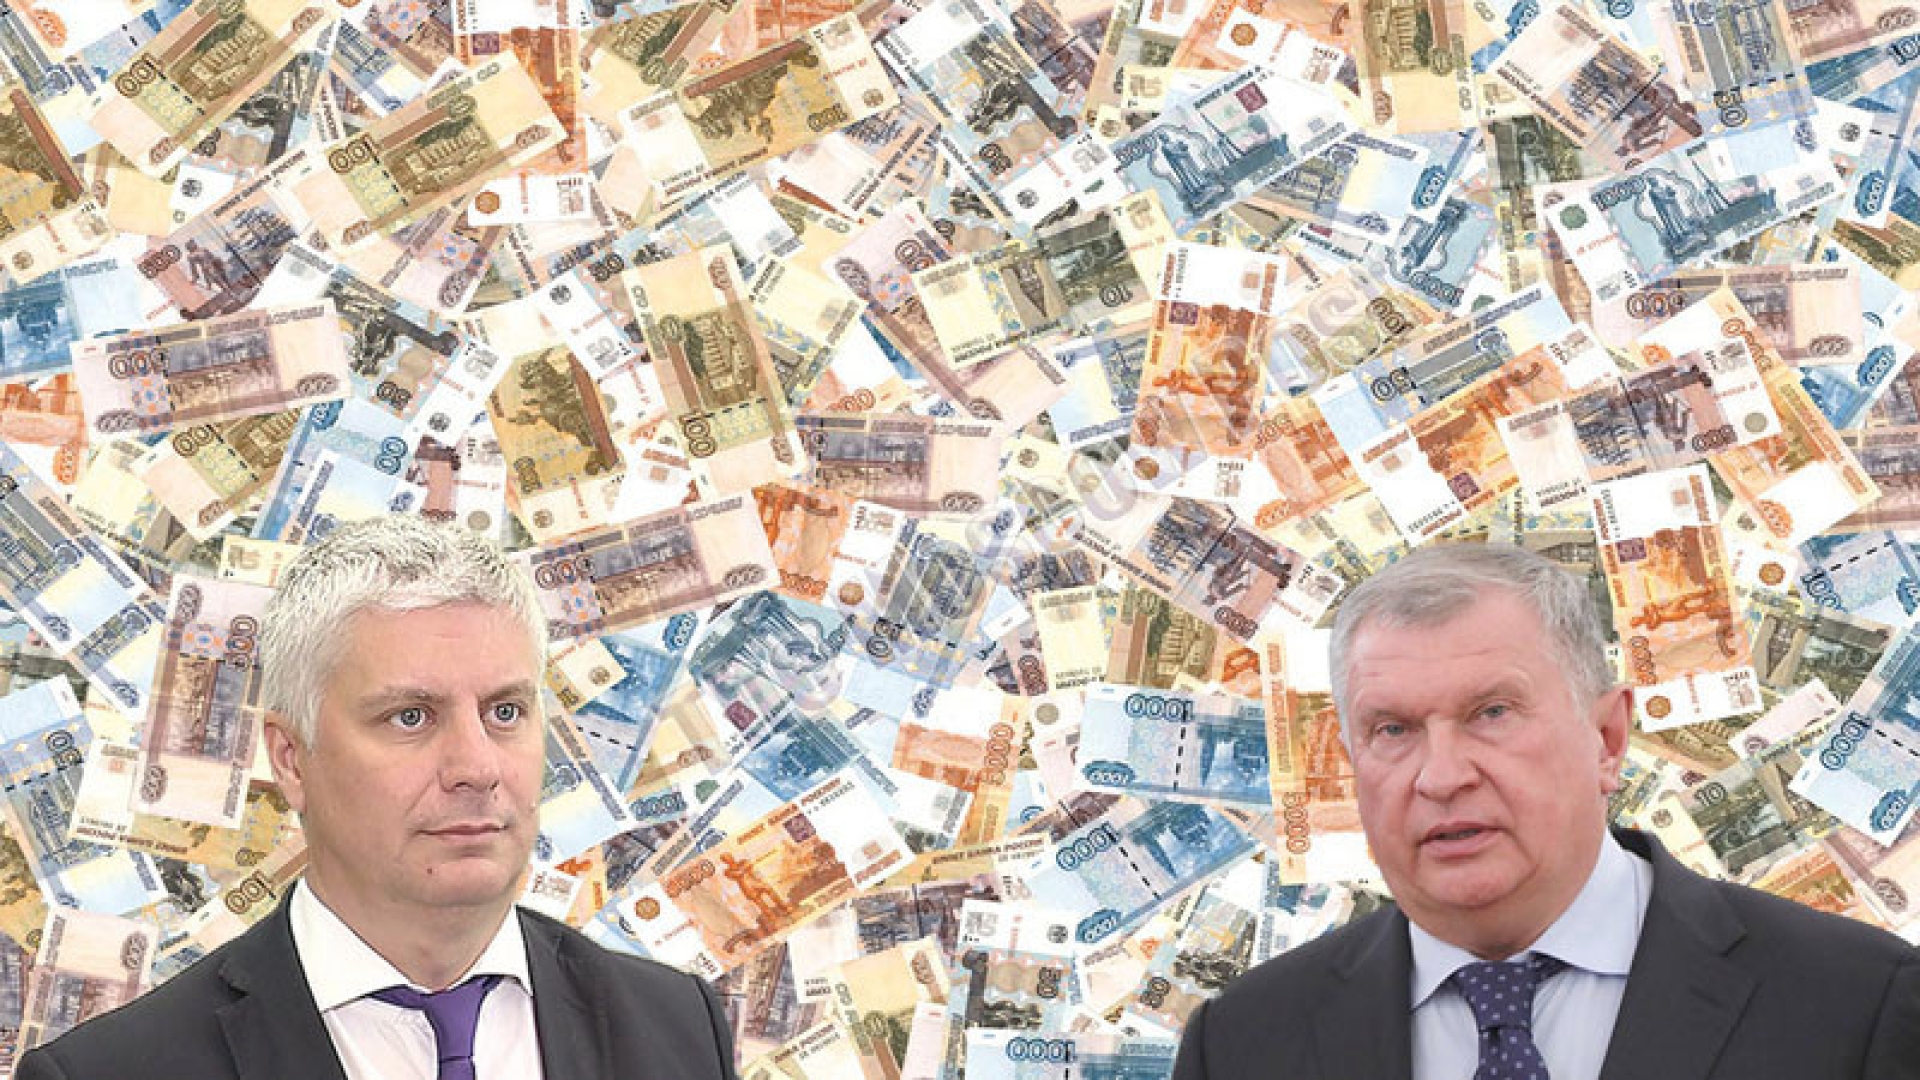 Does Vashchenko know where Sechin's money is?